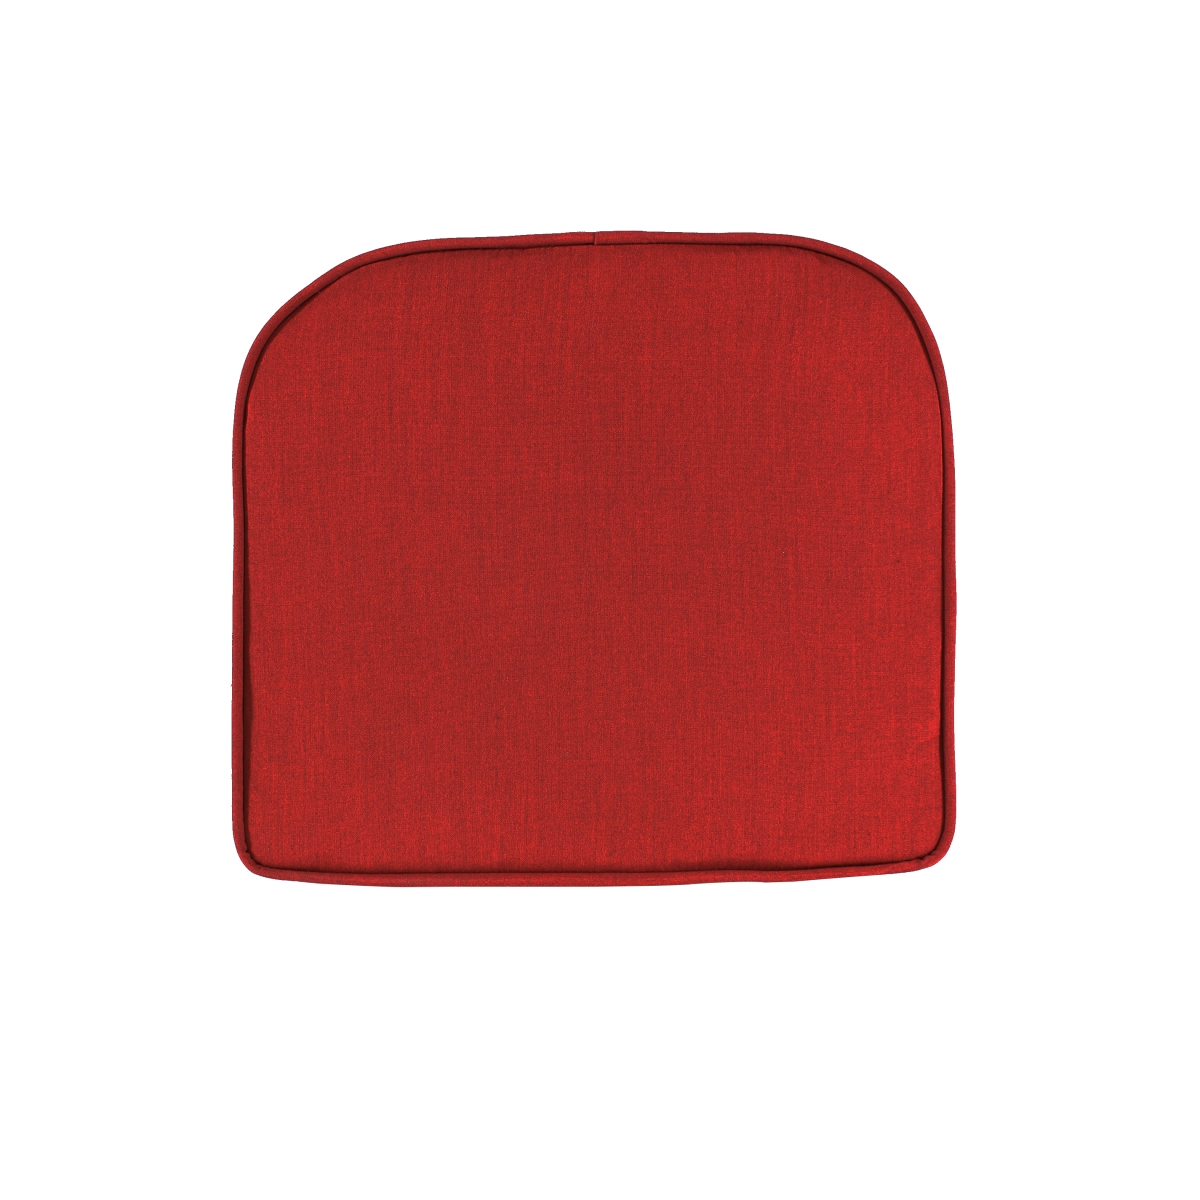 Cuws20-sda07 18 X 20 In. Pacifica Premium Double Welt Wicker Seat Cushion In Caliente